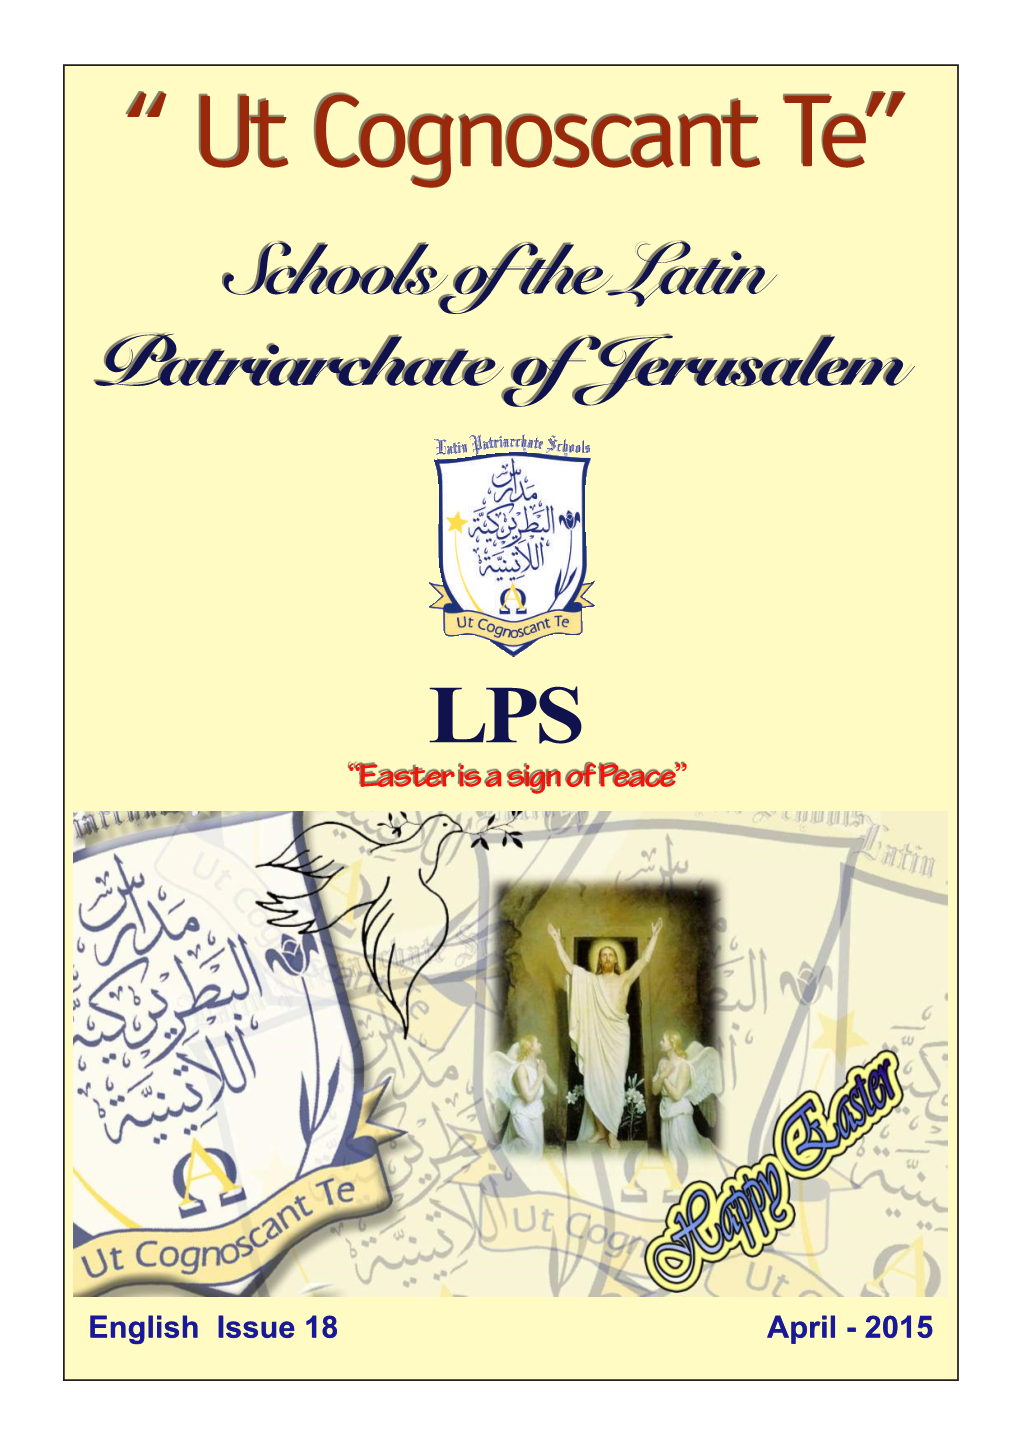 “ Ut Cognoscant Te” Schools of the Latin Patriarchate of Jerusalem